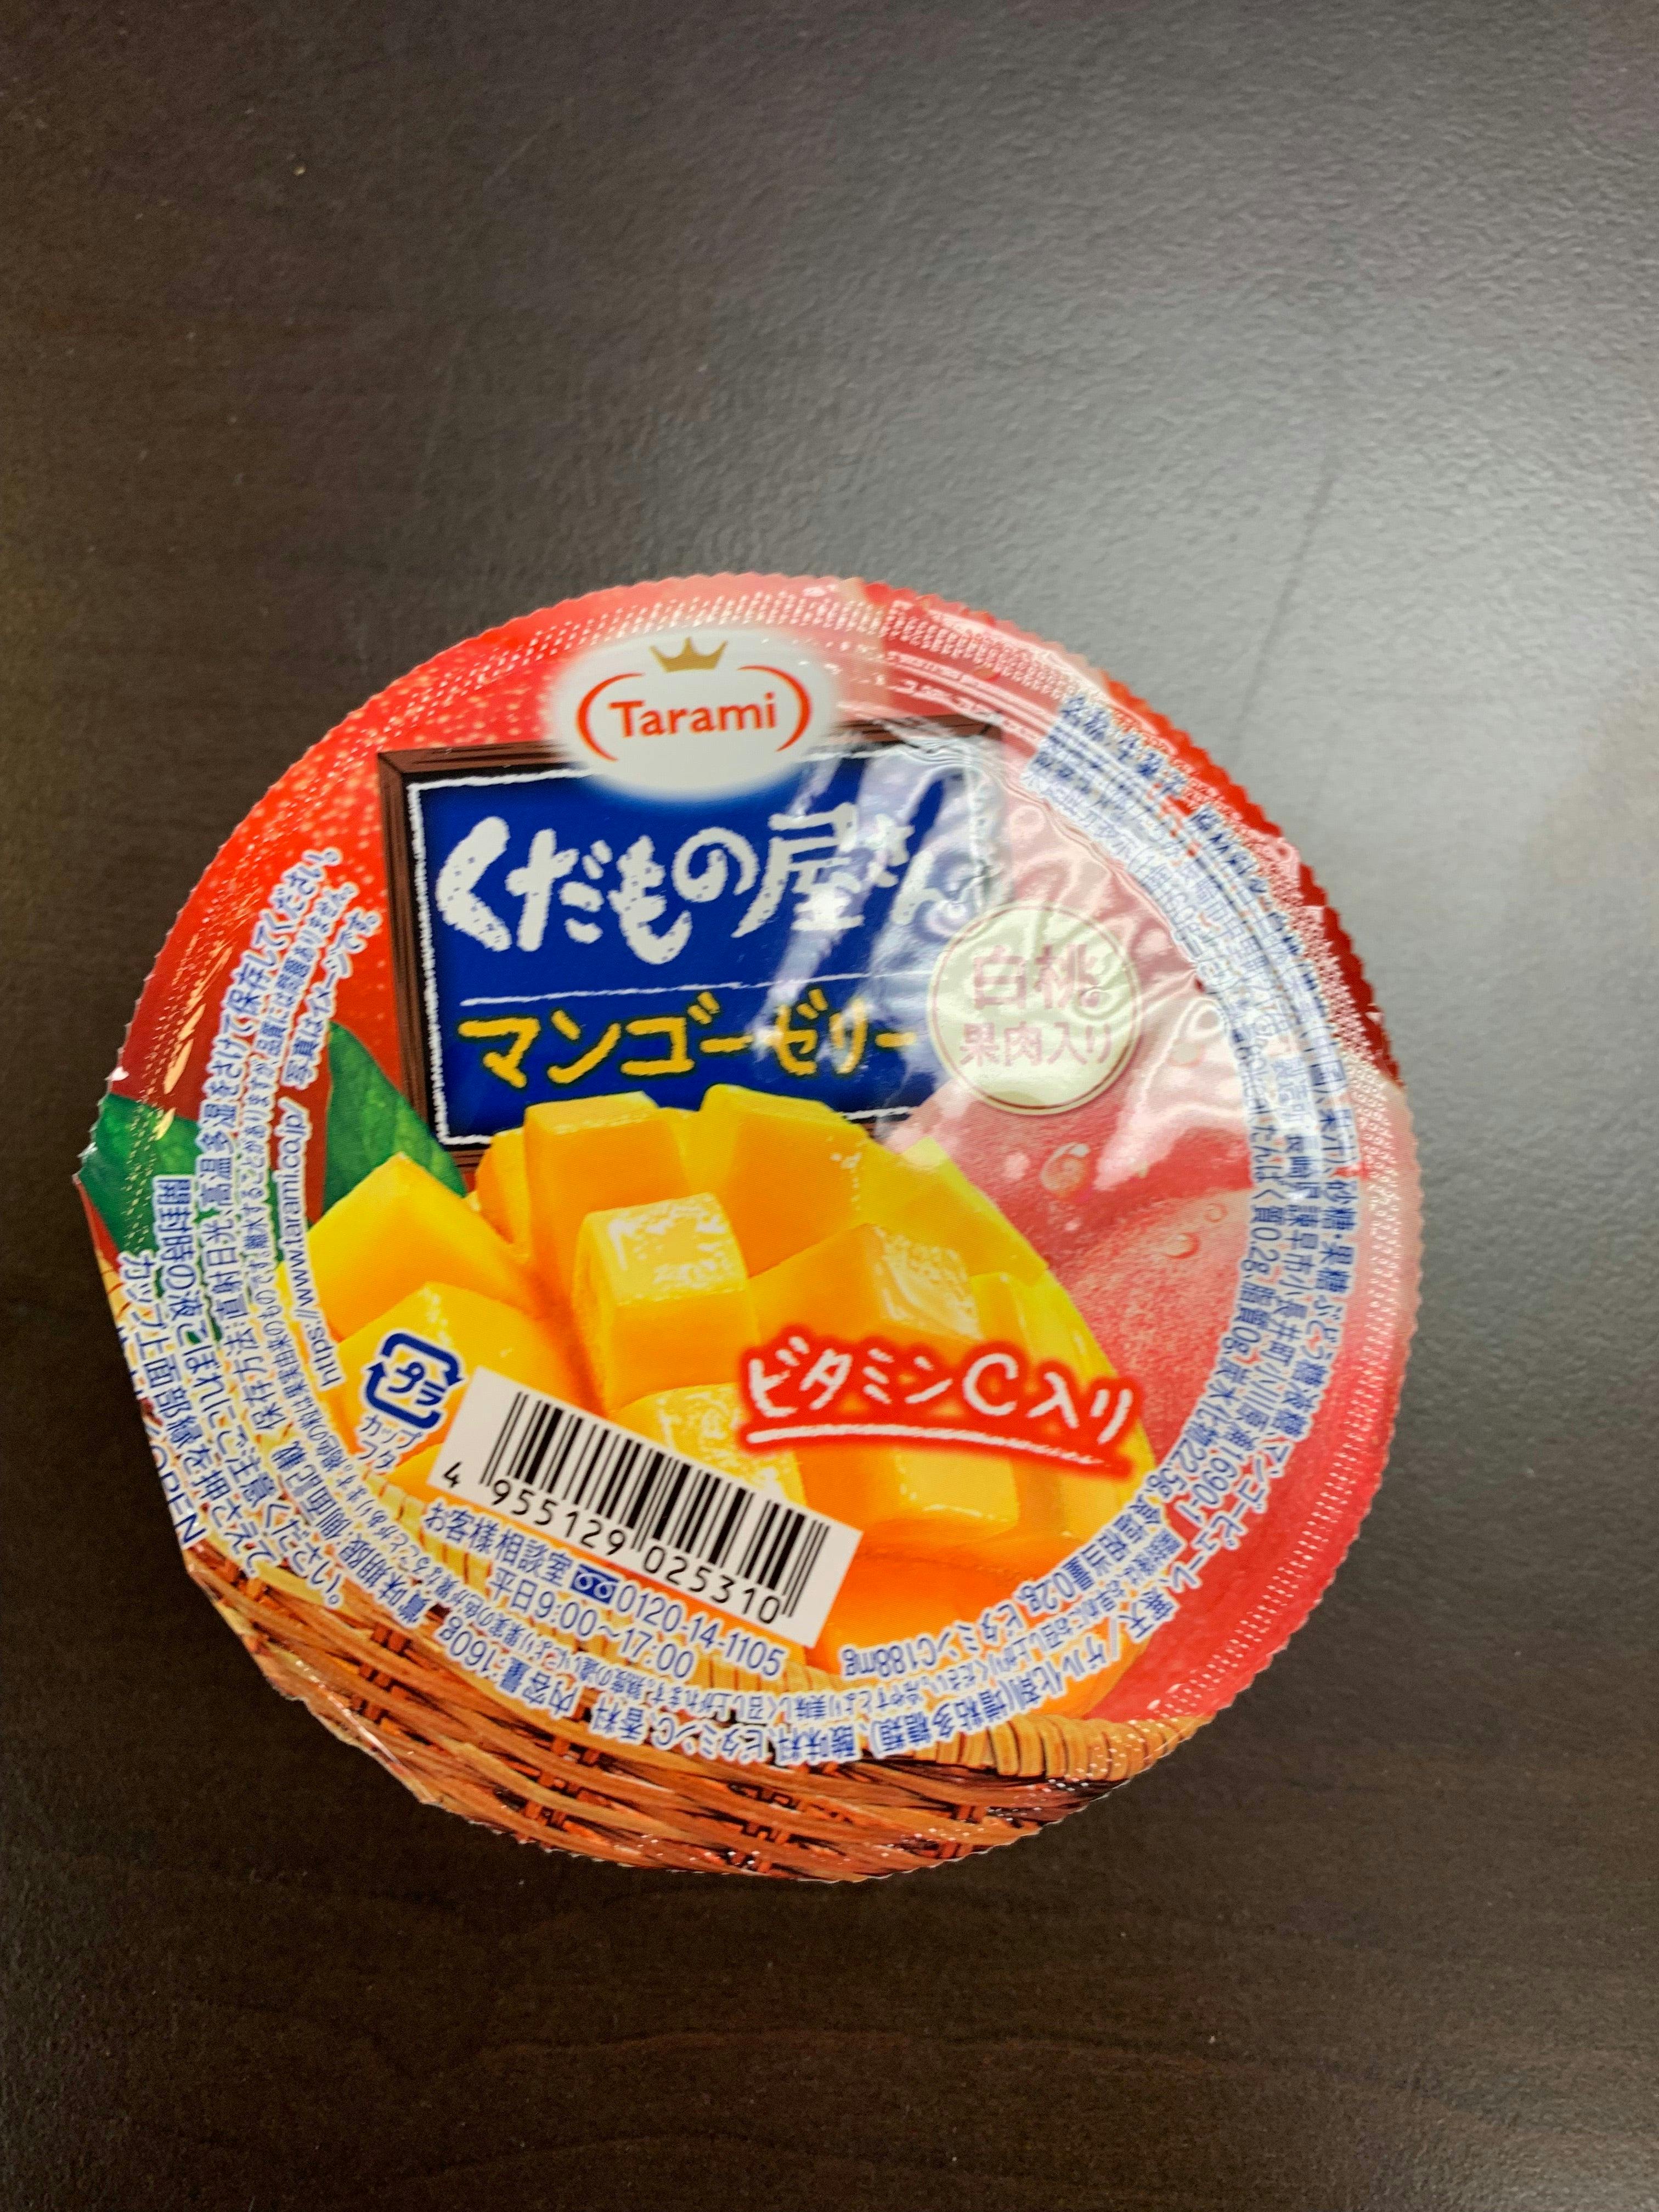 Tarami Mango & Momo (Peach) Jelly Cup 160g 芒果桃子 果冻